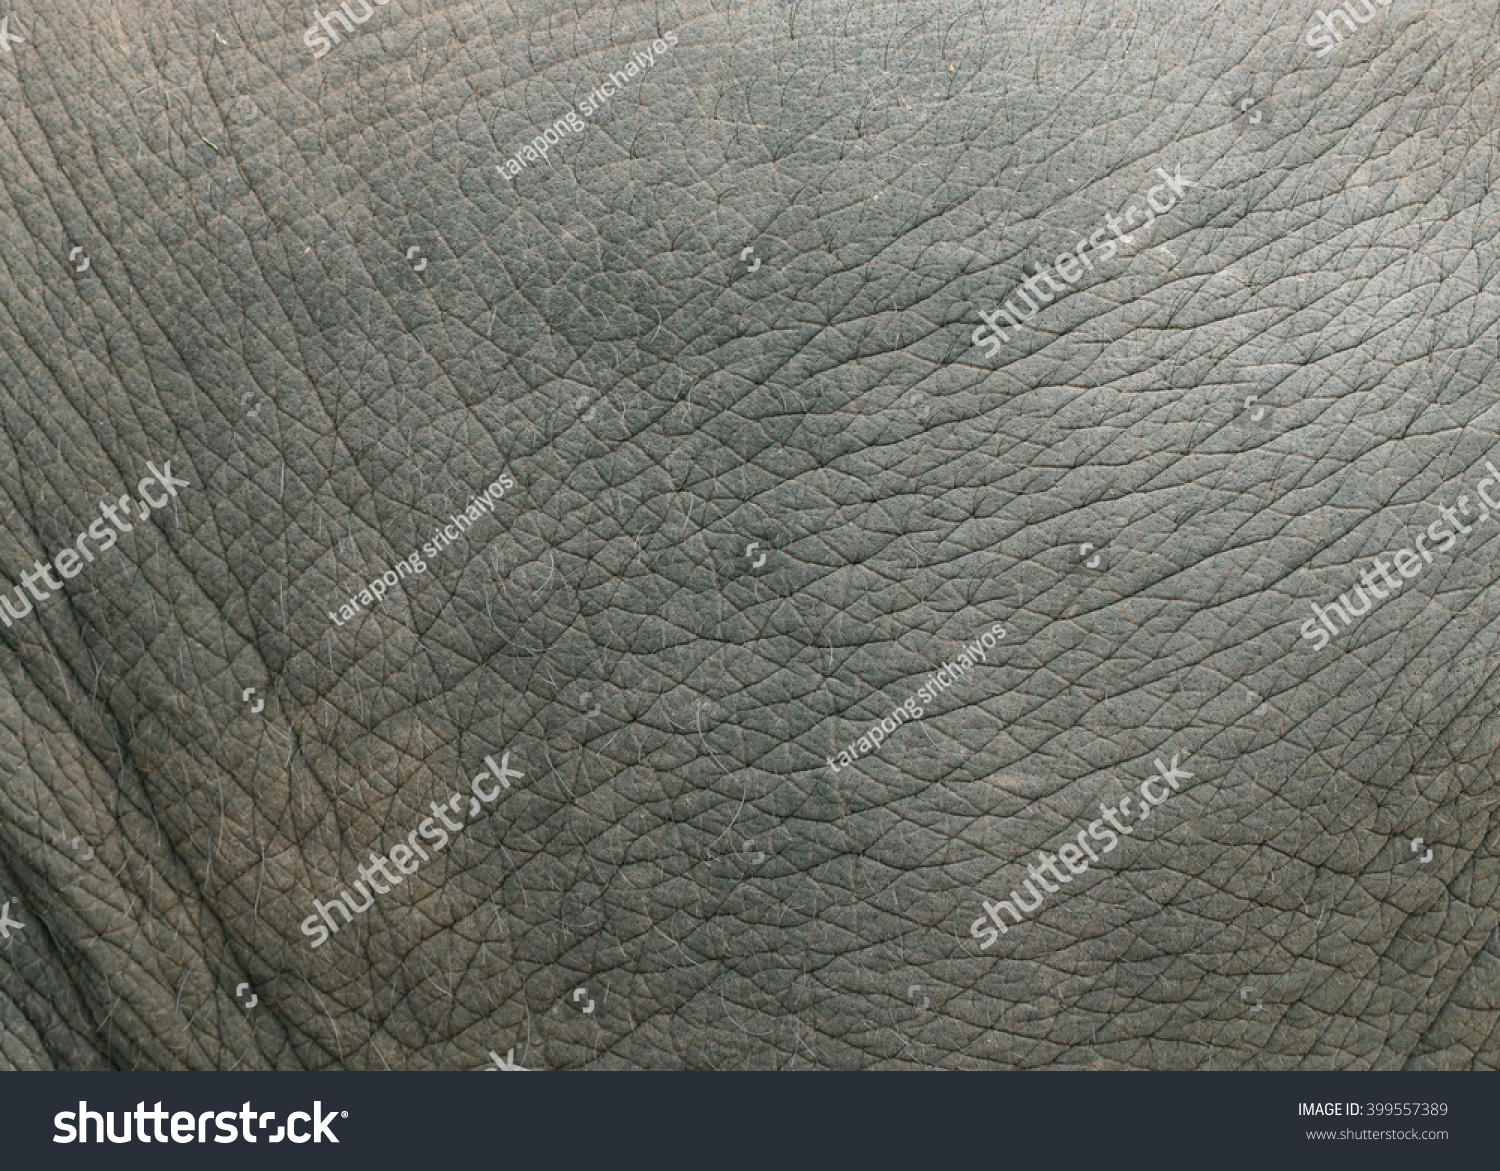 Elephant skin texture. #399557389